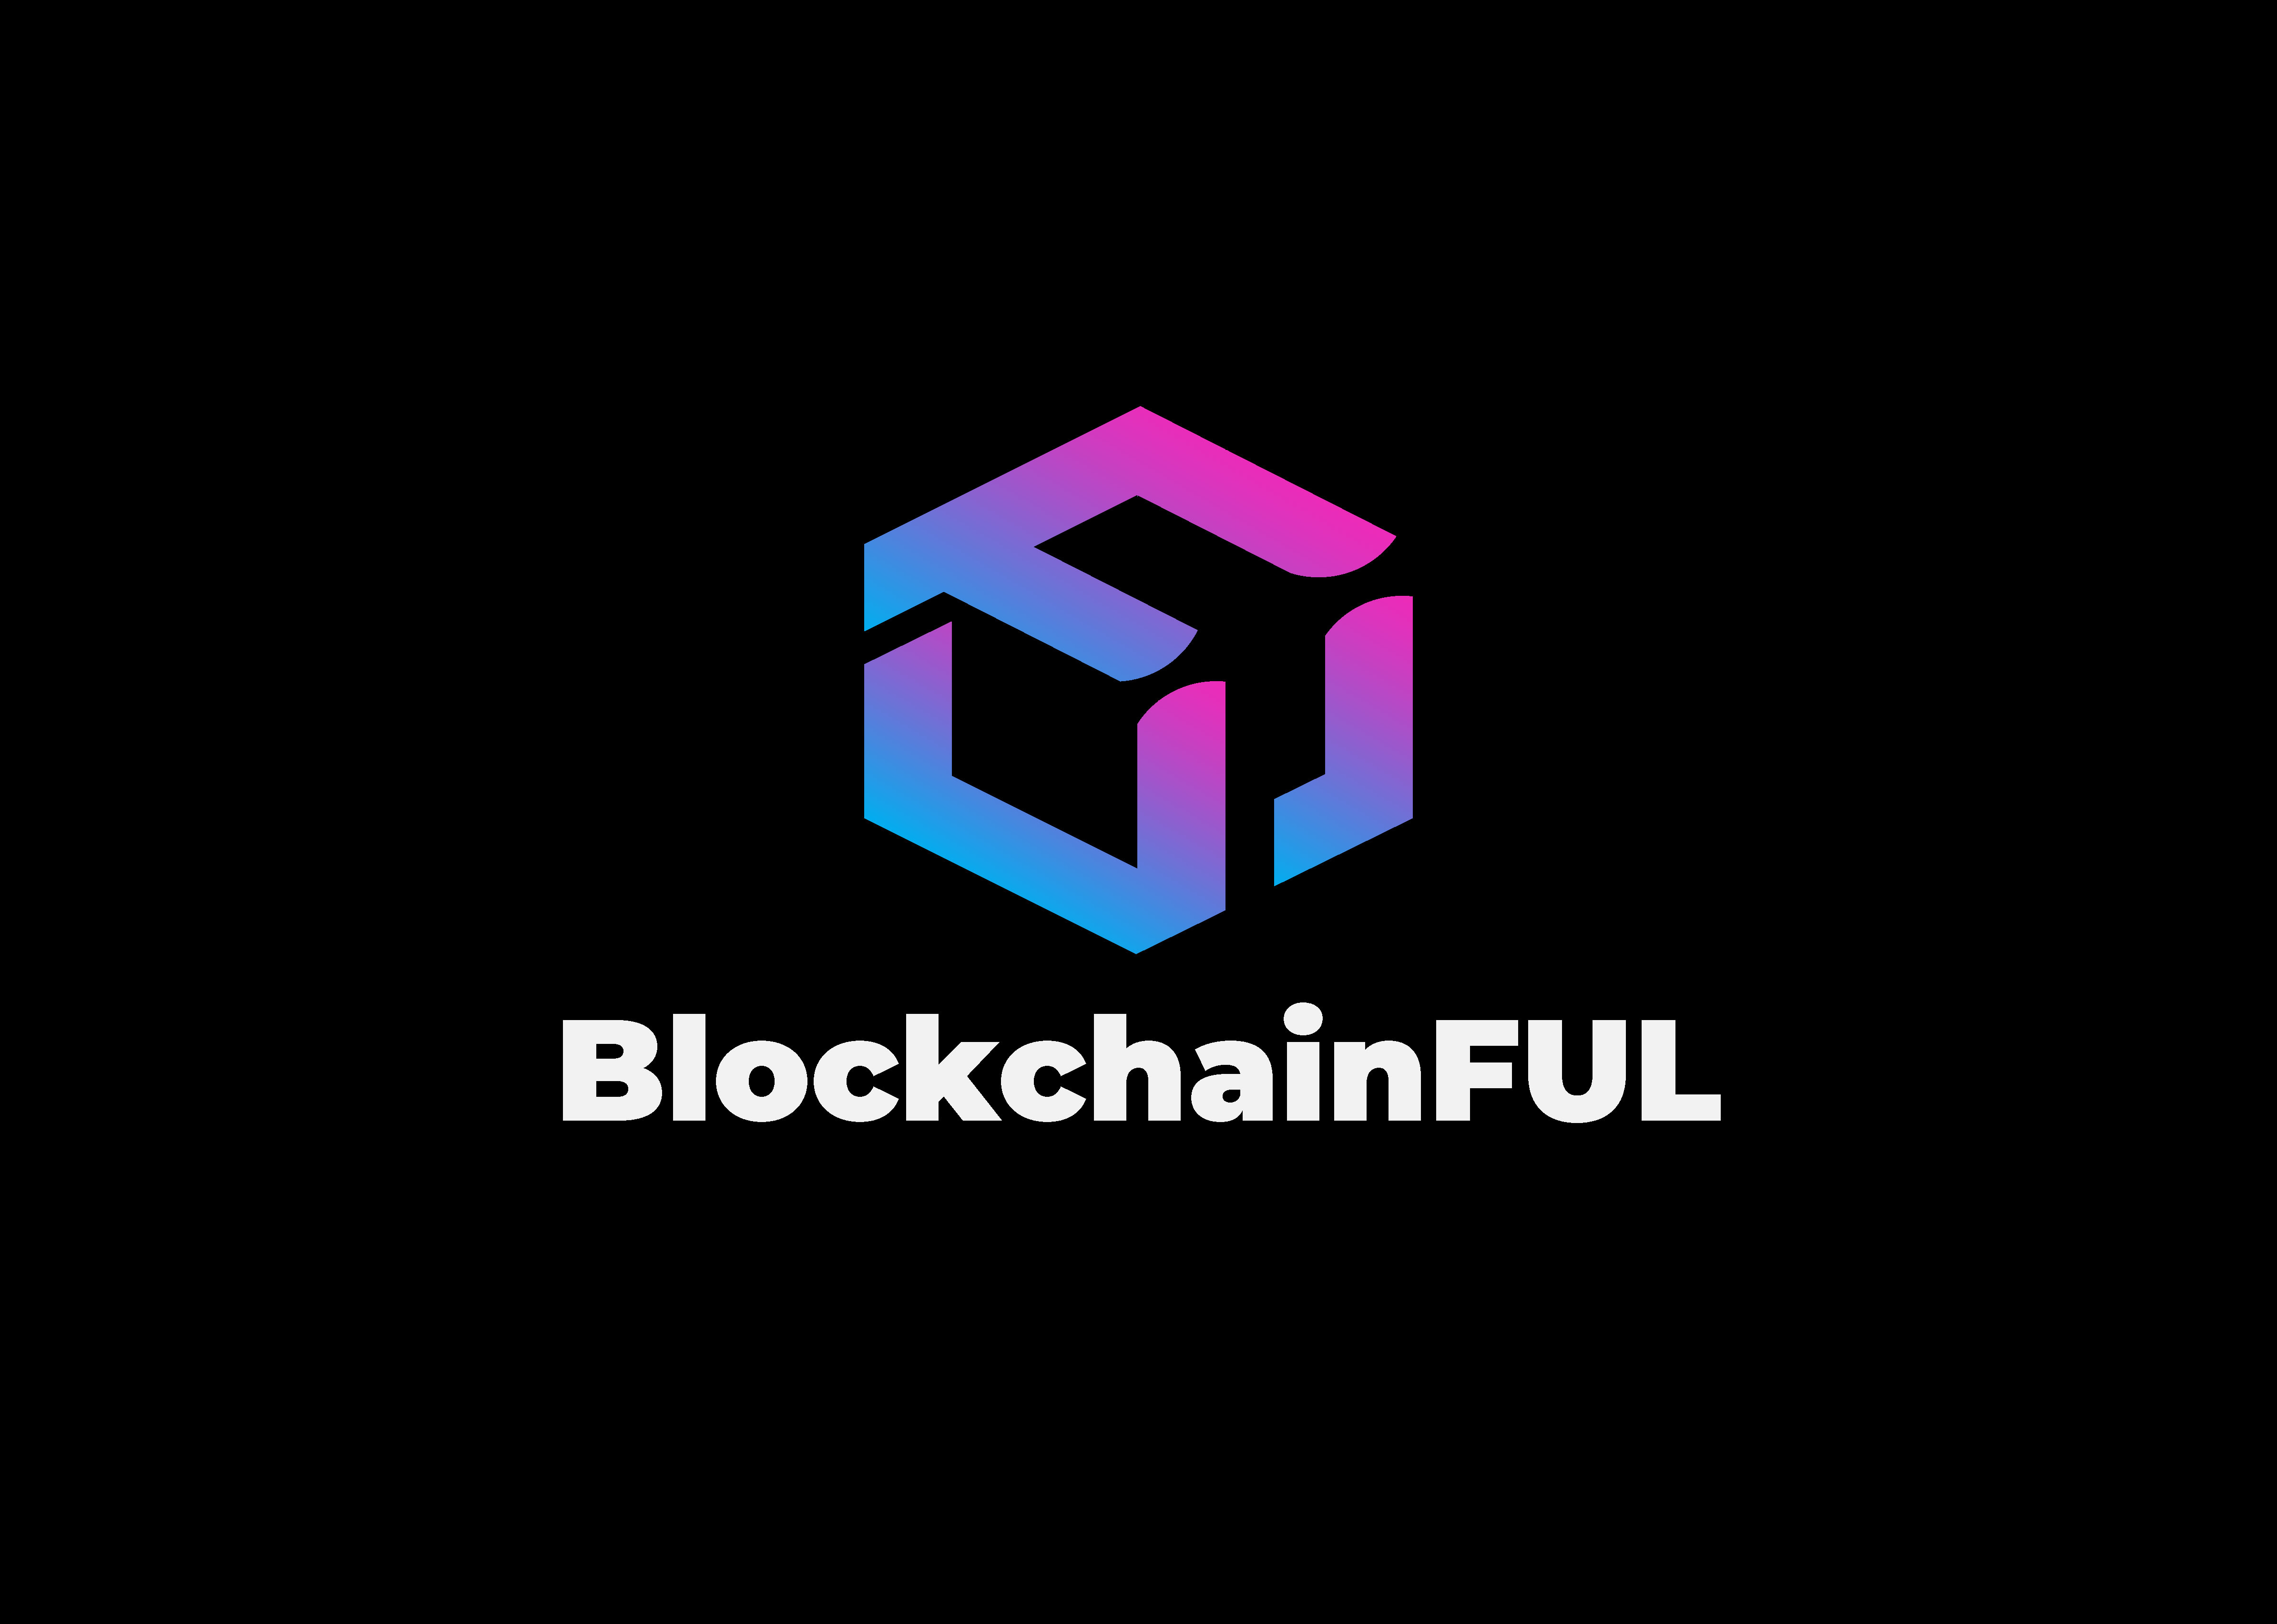 Blockchain FUL logo